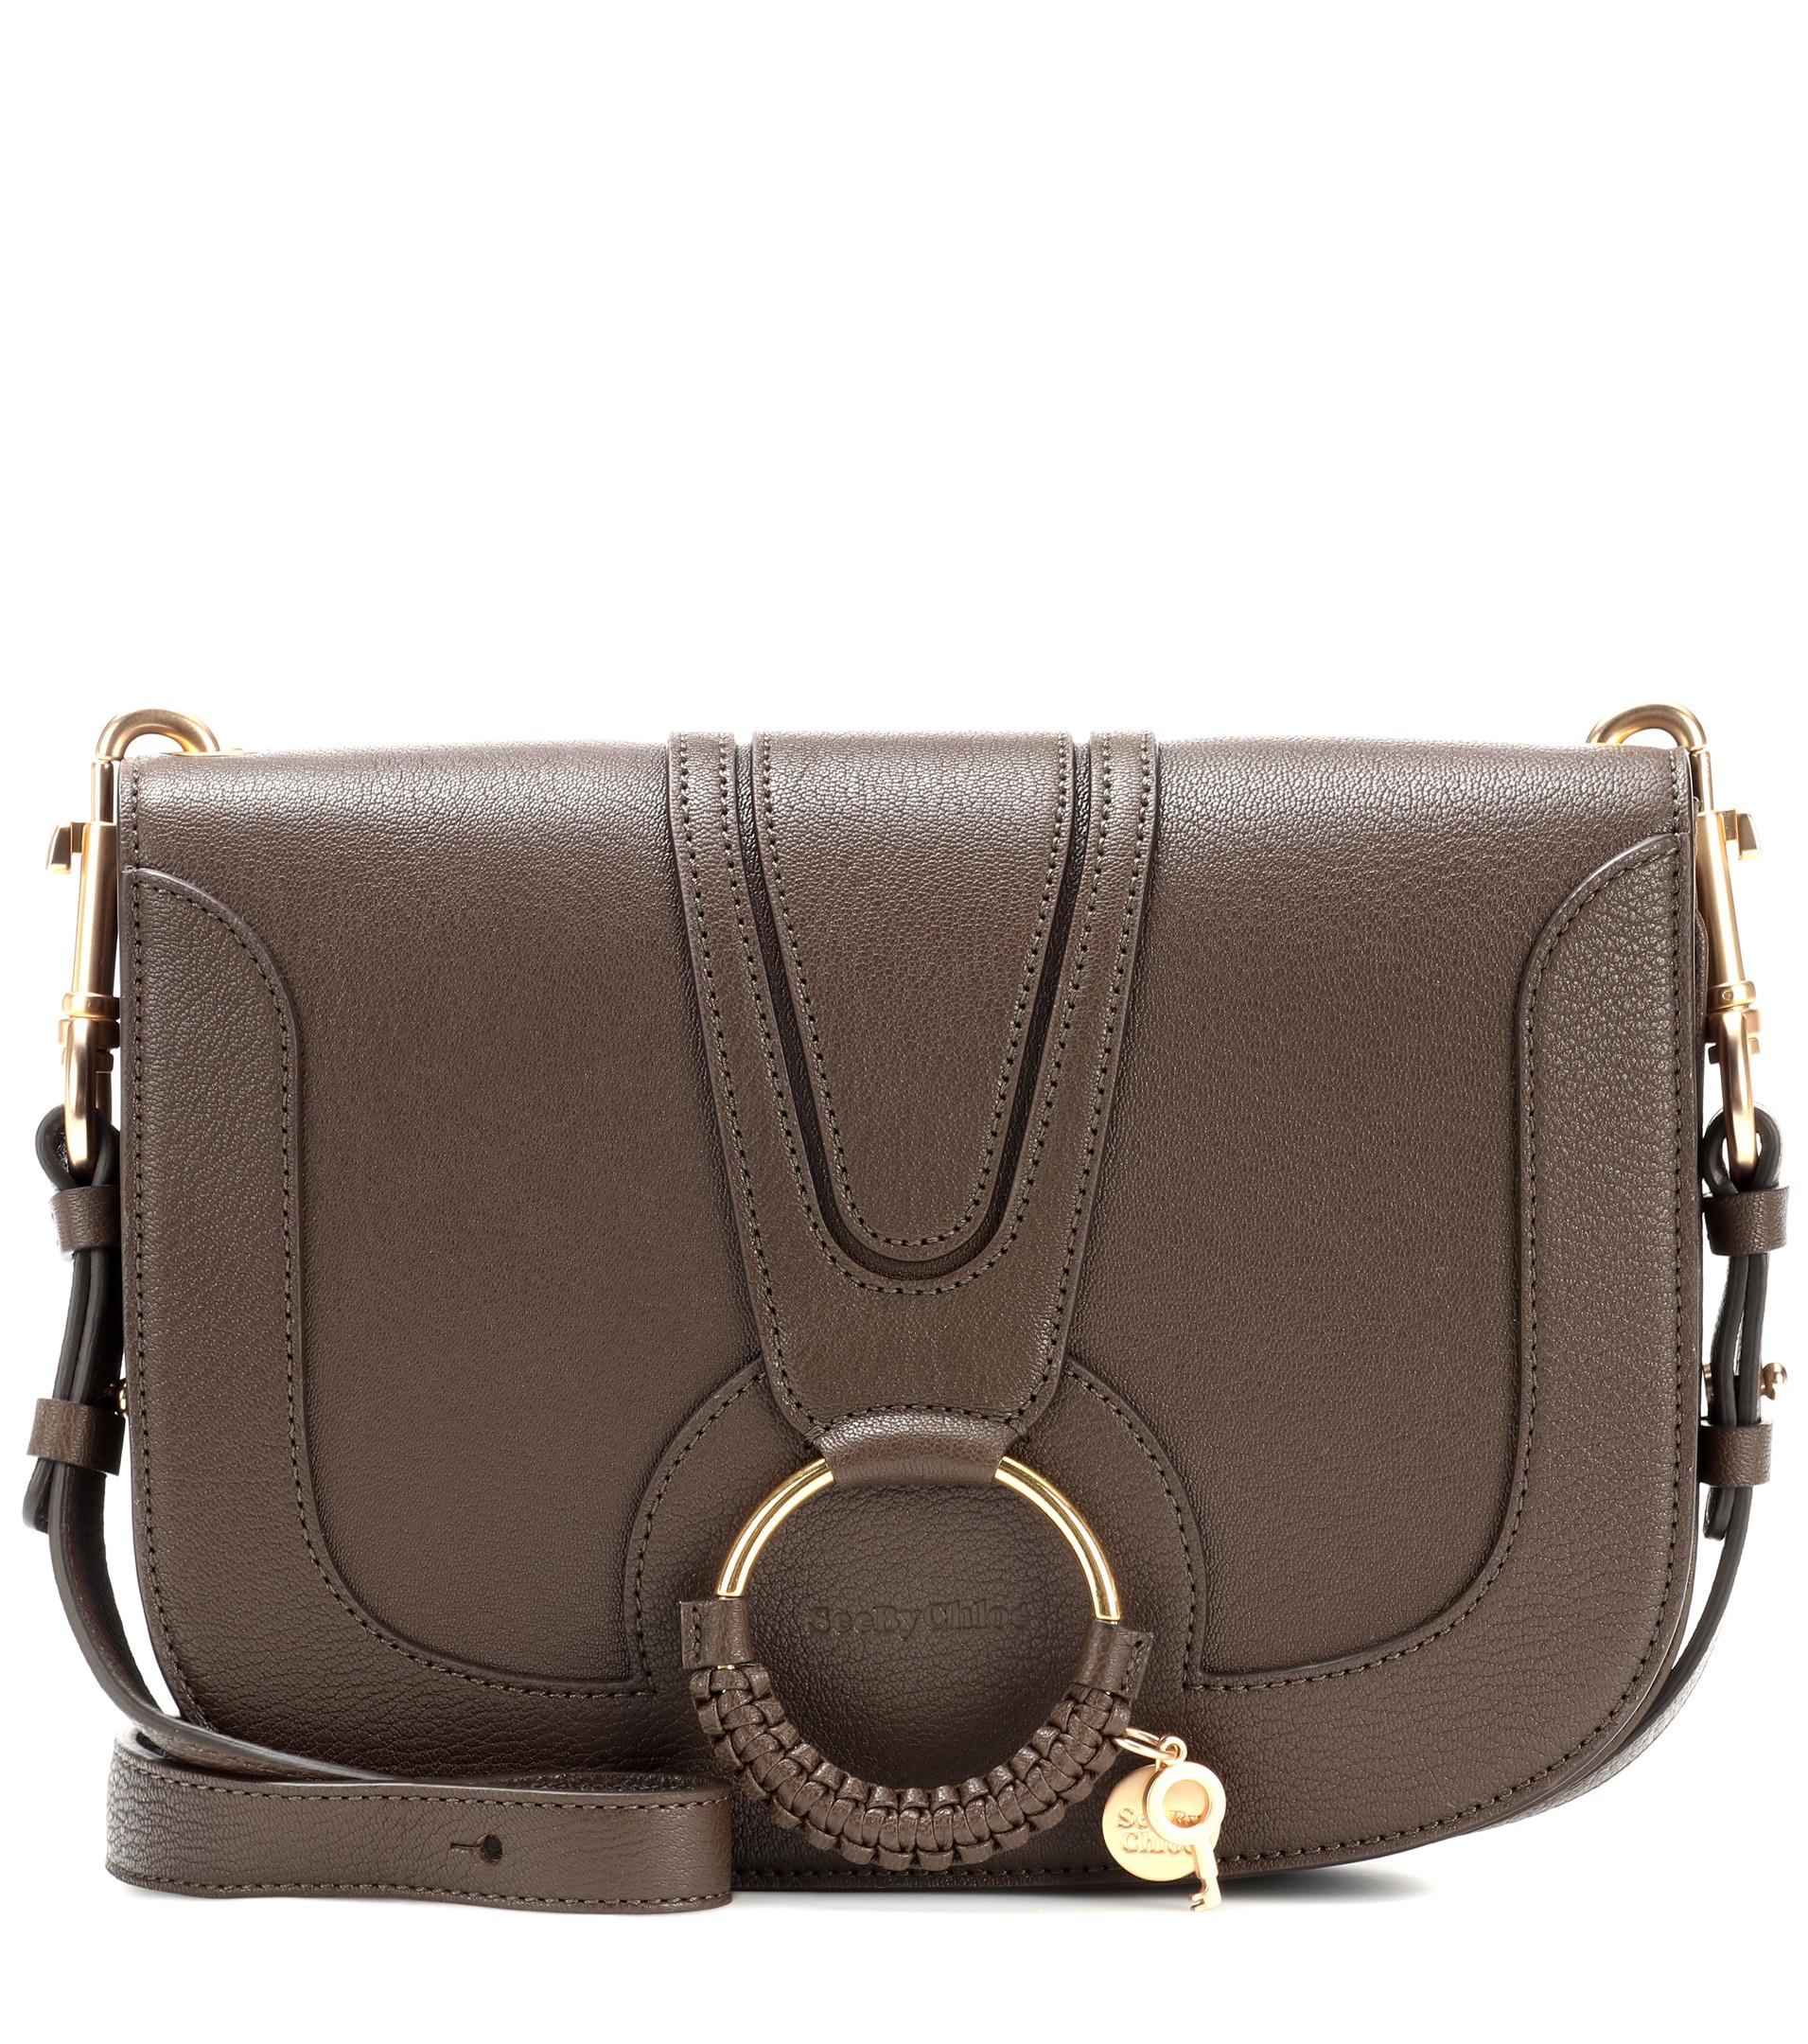 See by chloé Hana Medium Leather Shoulder Bag in Brown | Lyst